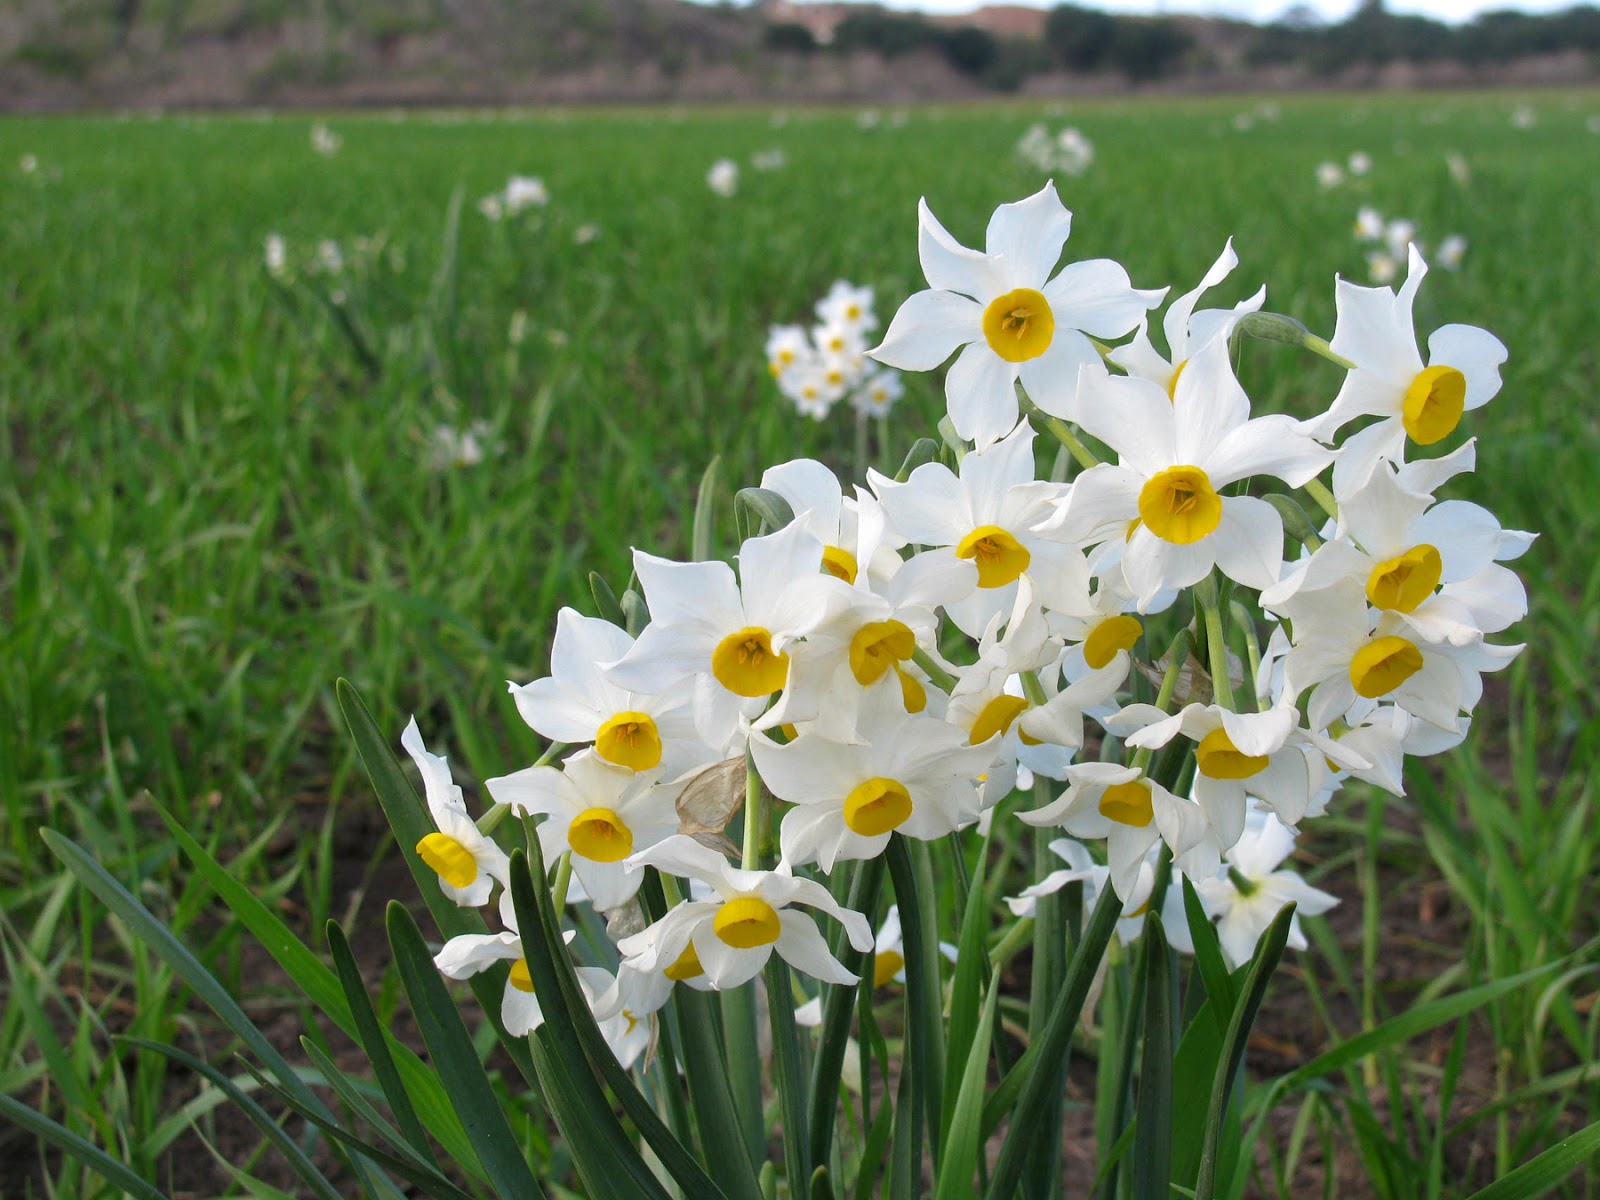 Narzissen - Frühlingsblumen, auch bekannt als Narzissen